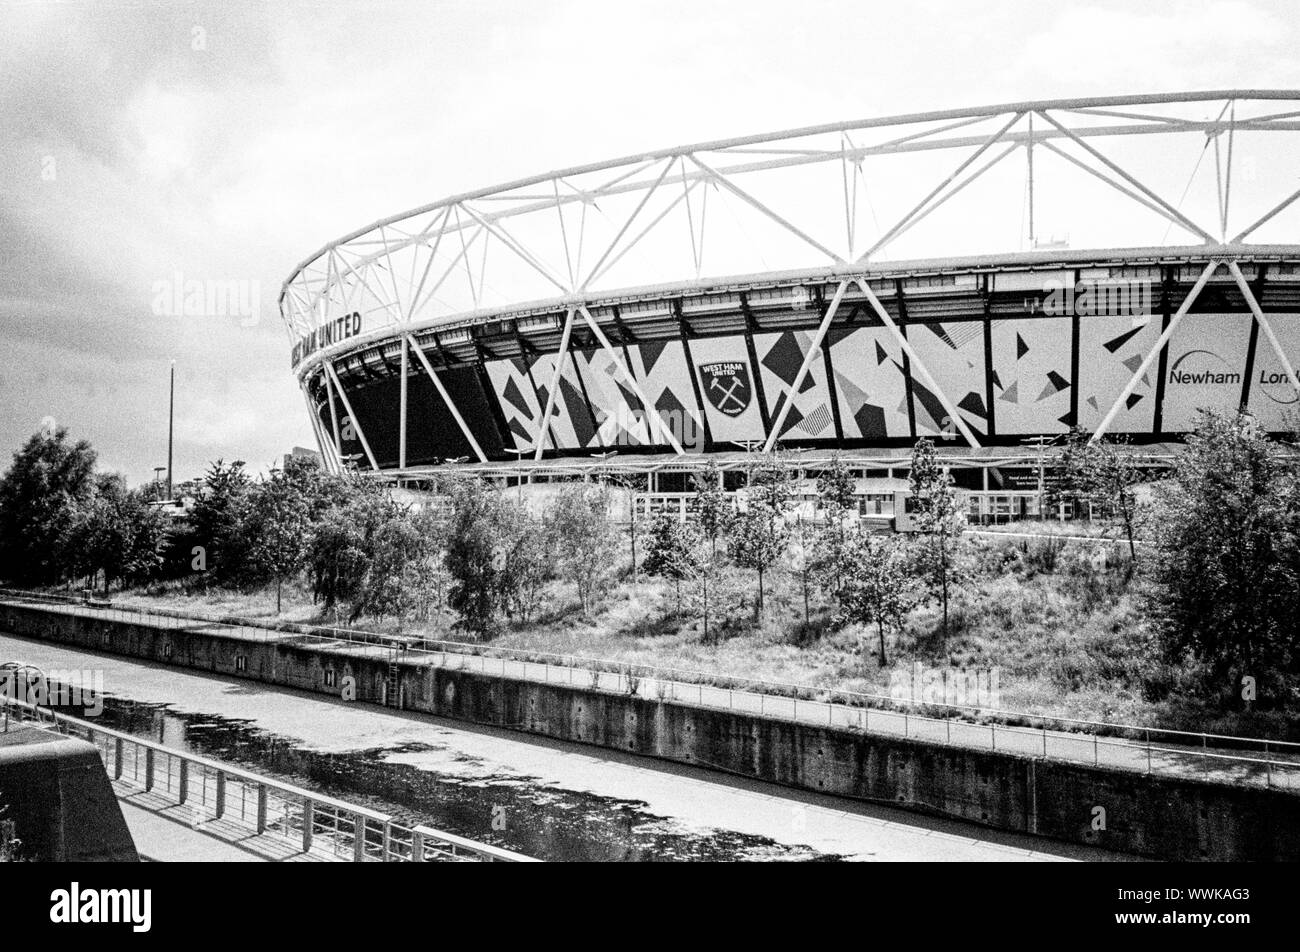 West Ham United Stadium ou stade de Londres, Stratford, London, Angleterre, Royaume-Uni. Banque D'Images